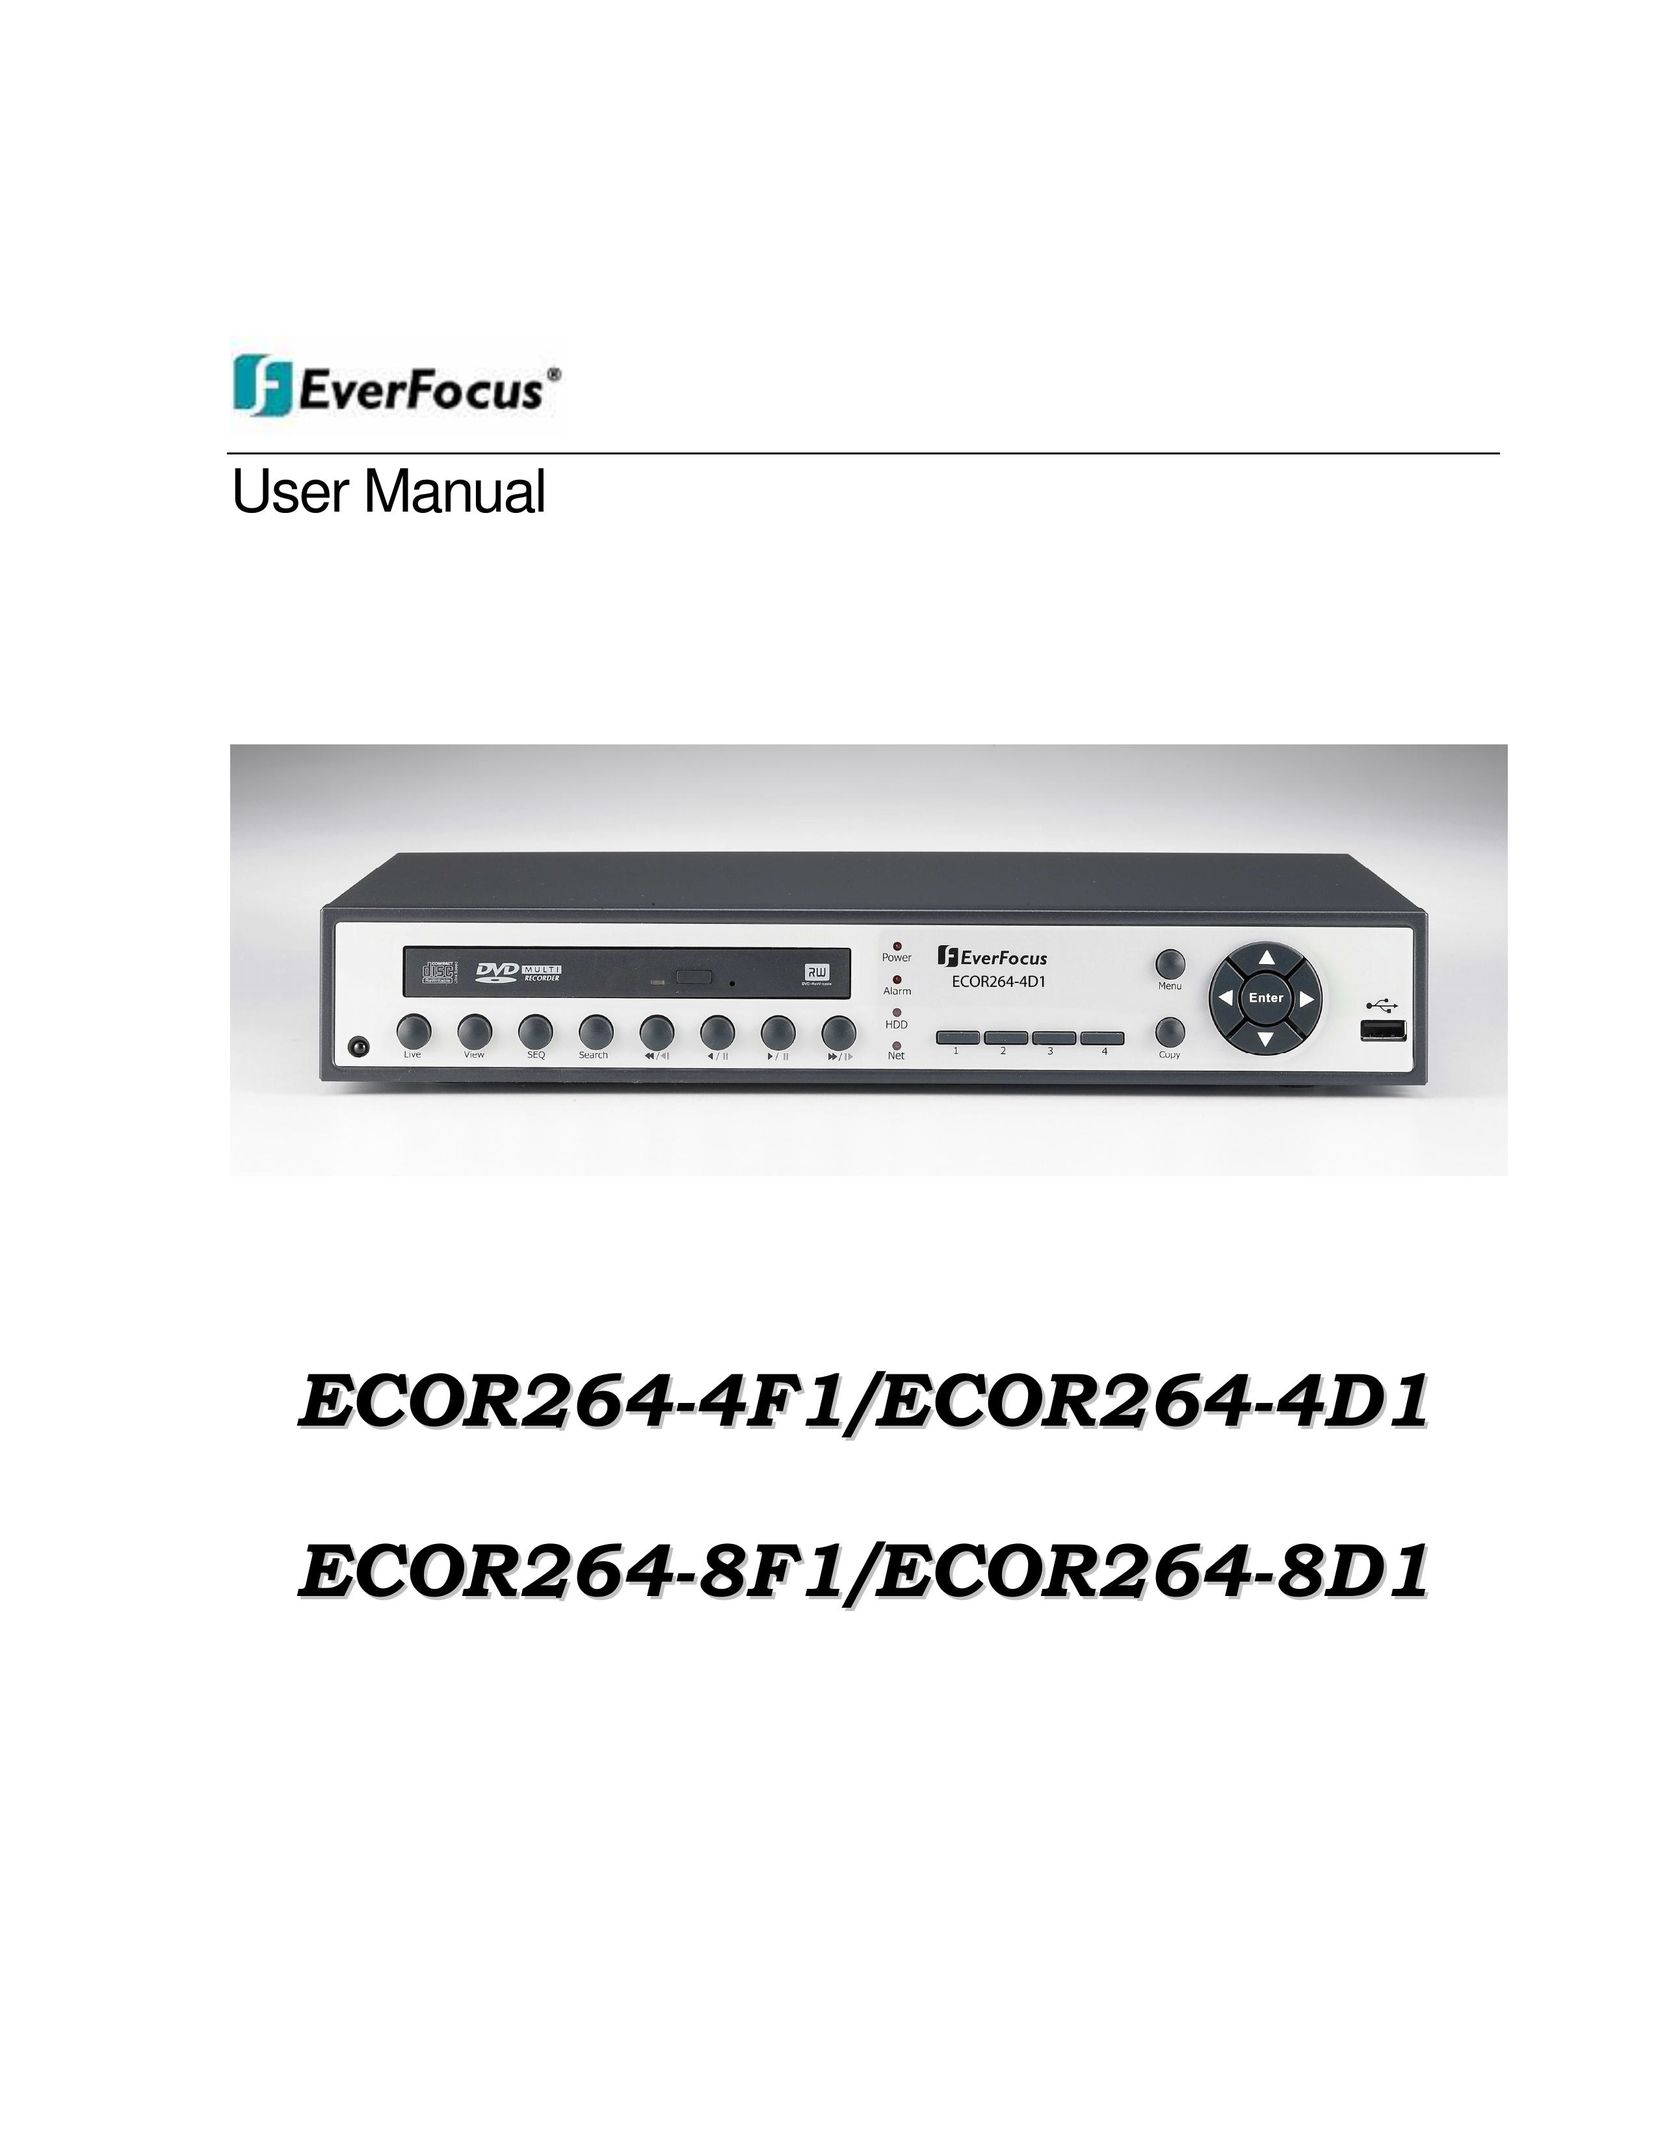 EverFocus ECOR264-8D1 DVR User Manual